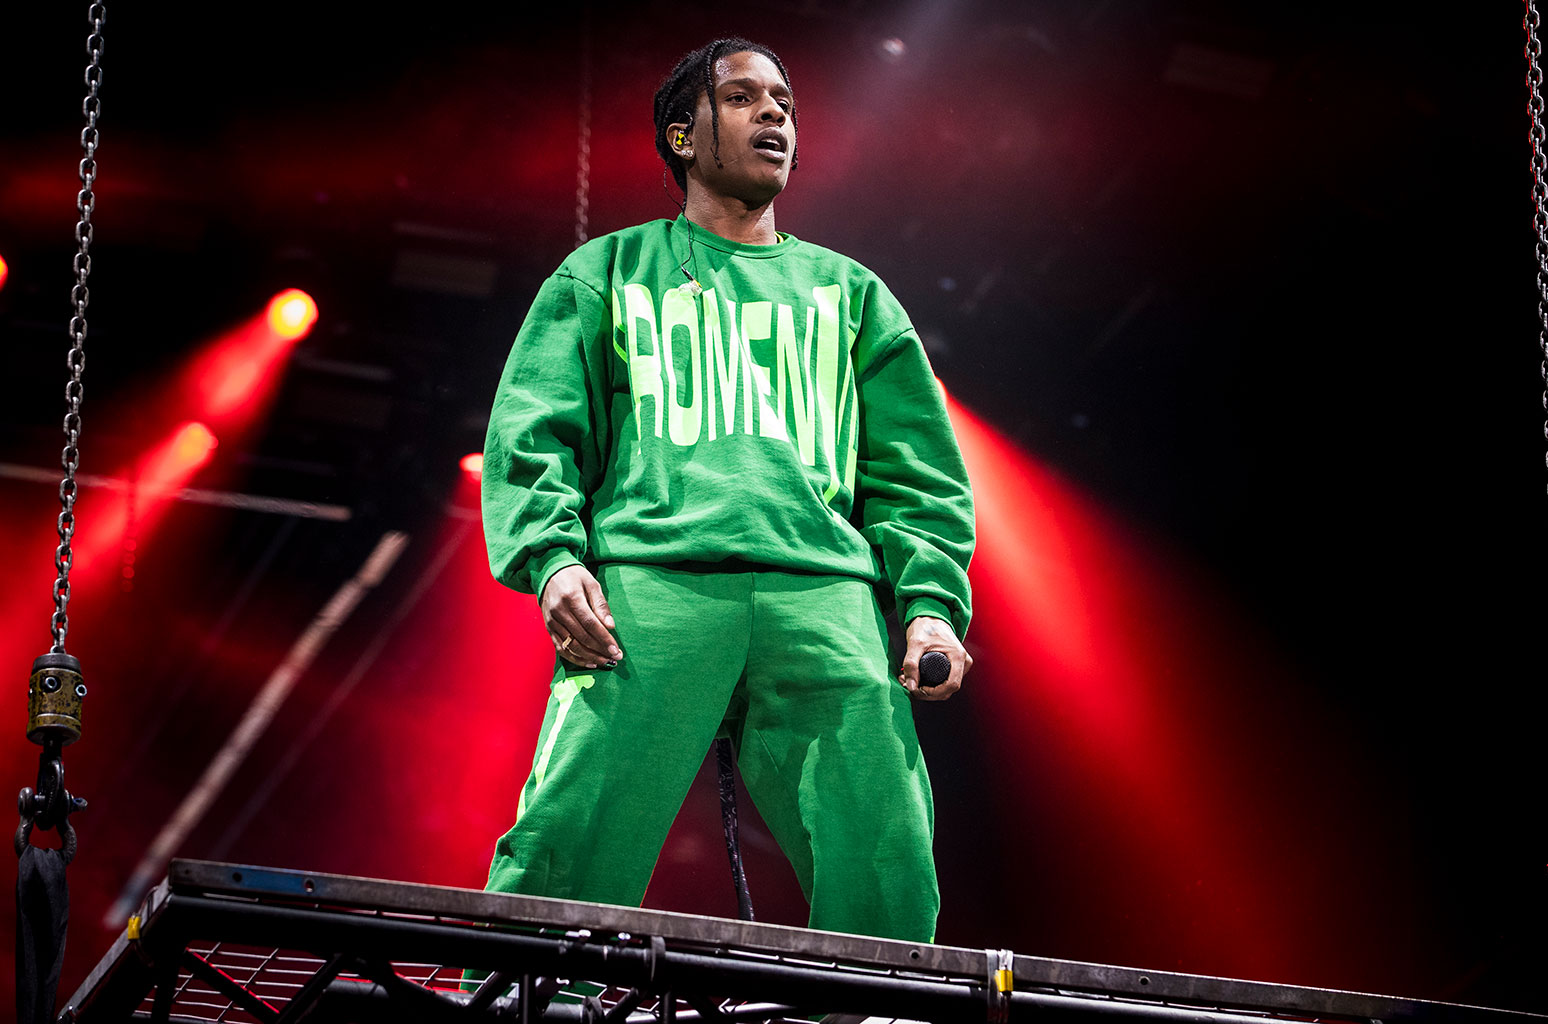 Ap Rocky - Watch A$AP Rocky Perform Inside a Cage for First Swedish Concert After Arrest - billboard.com - USA - Sweden - city Stockholm